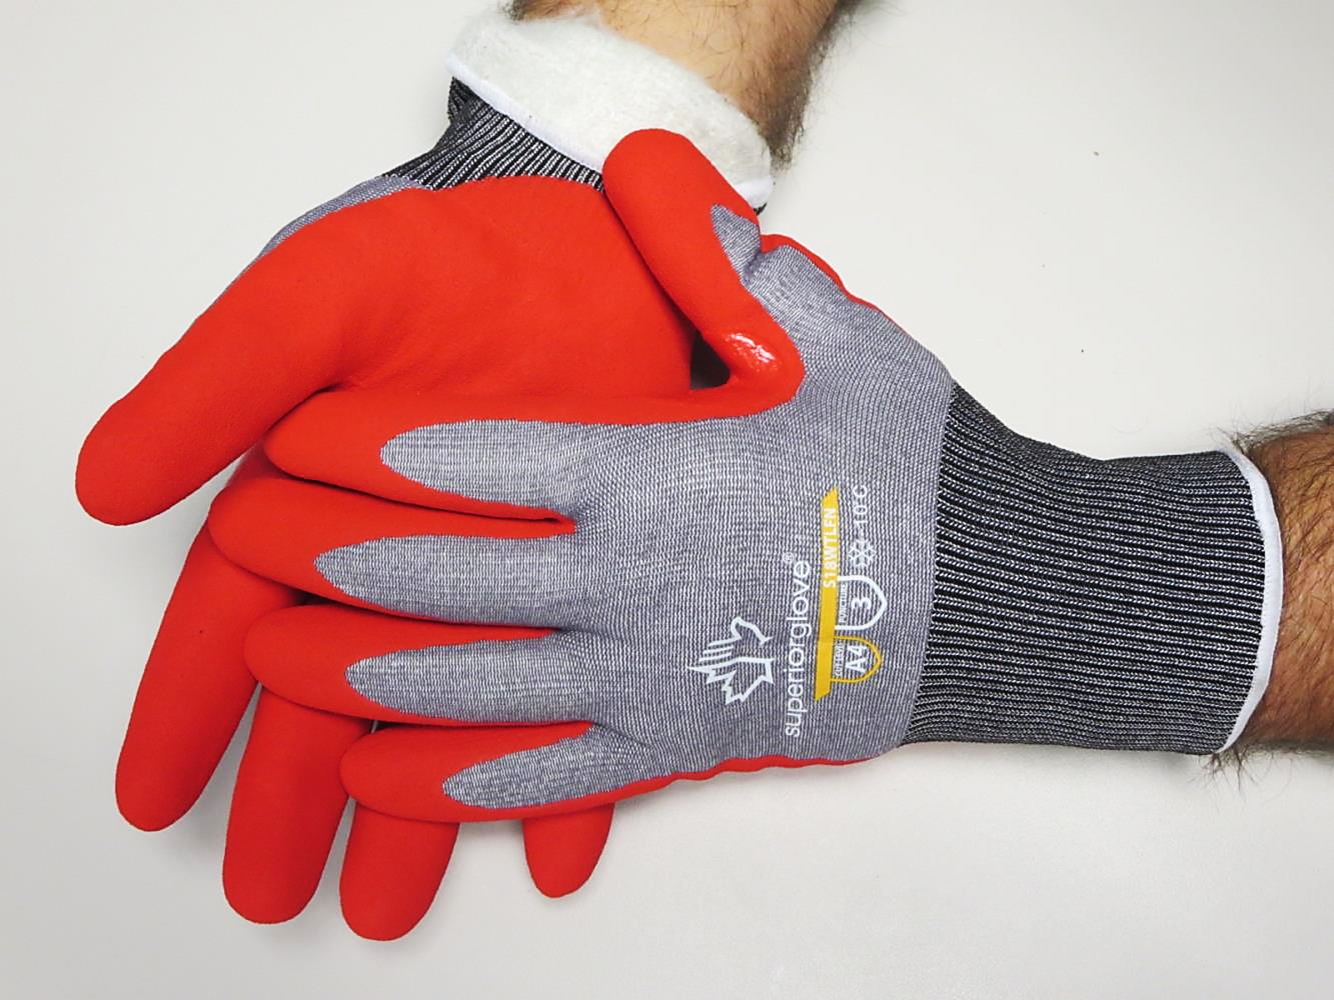 S18WTLFN Superior Glove® TenActiv™ Waterproof Foam Nitrile Coated Winter Gloves